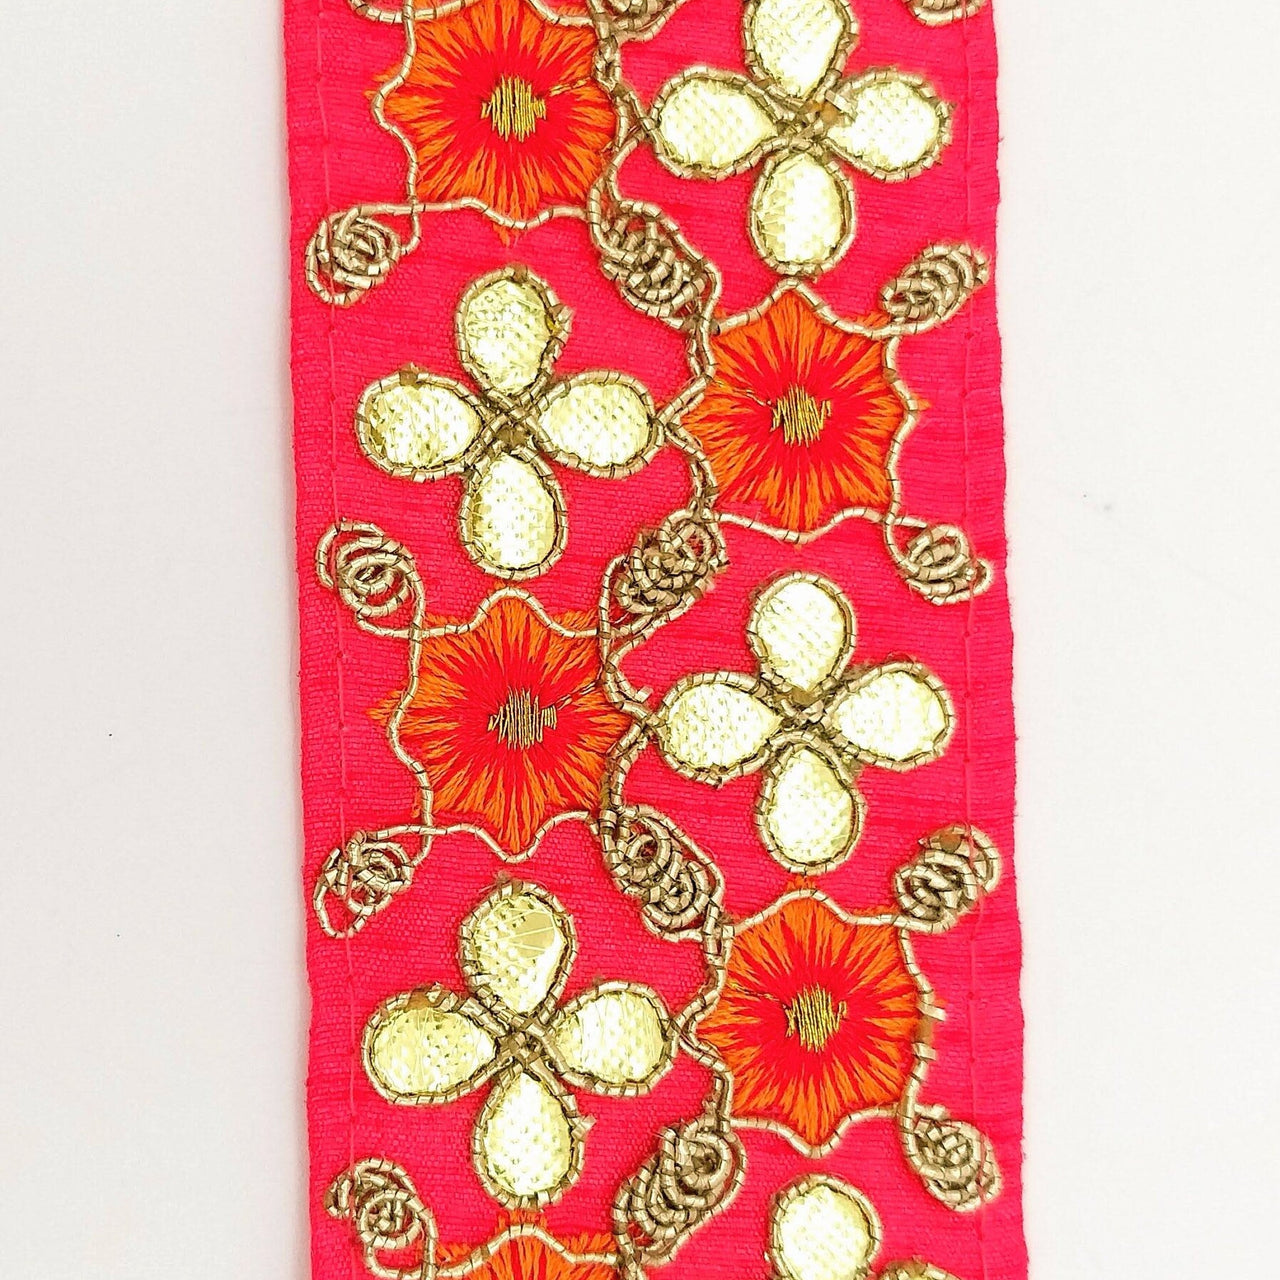 Radical Red Art Silk Fabric Trim, Orange & Gold Floral Embroidery Gota Patti Indian Sari Border Trim By Yard Decorative Trim Craft Lace